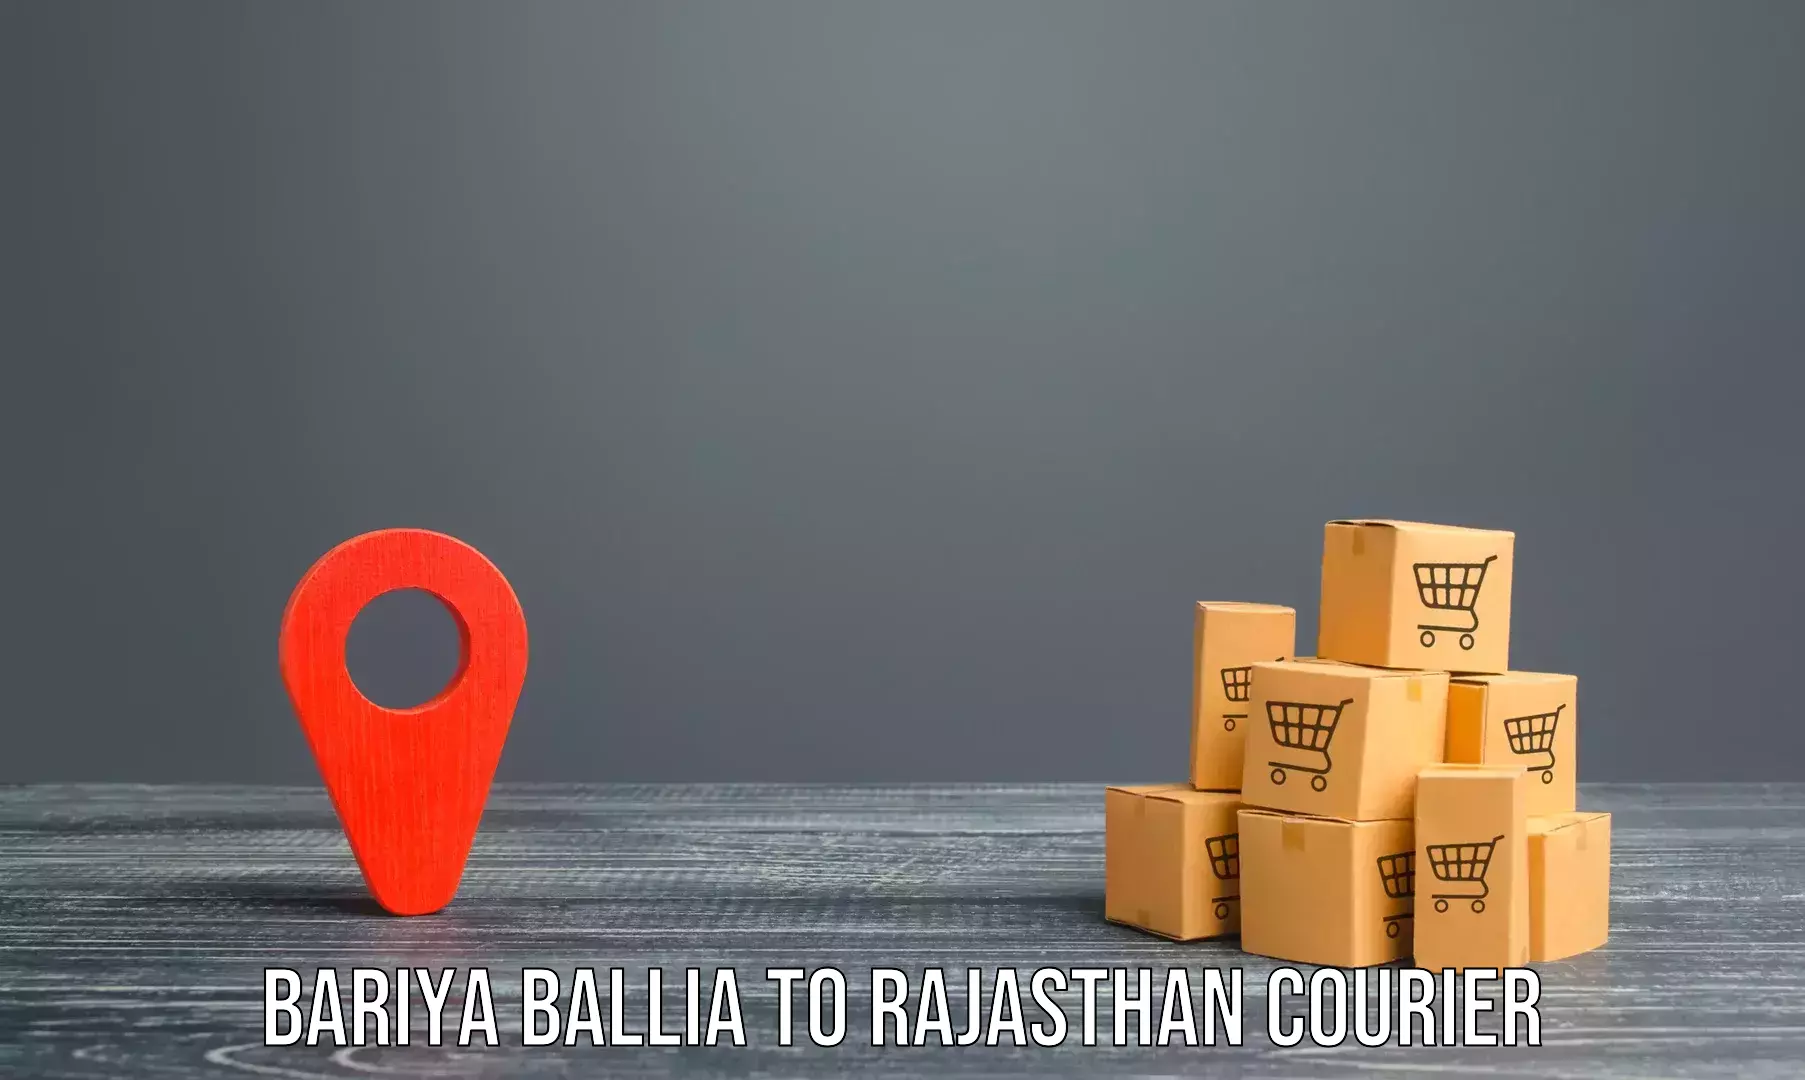 Furniture delivery service Bariya Ballia to Chittorgarh